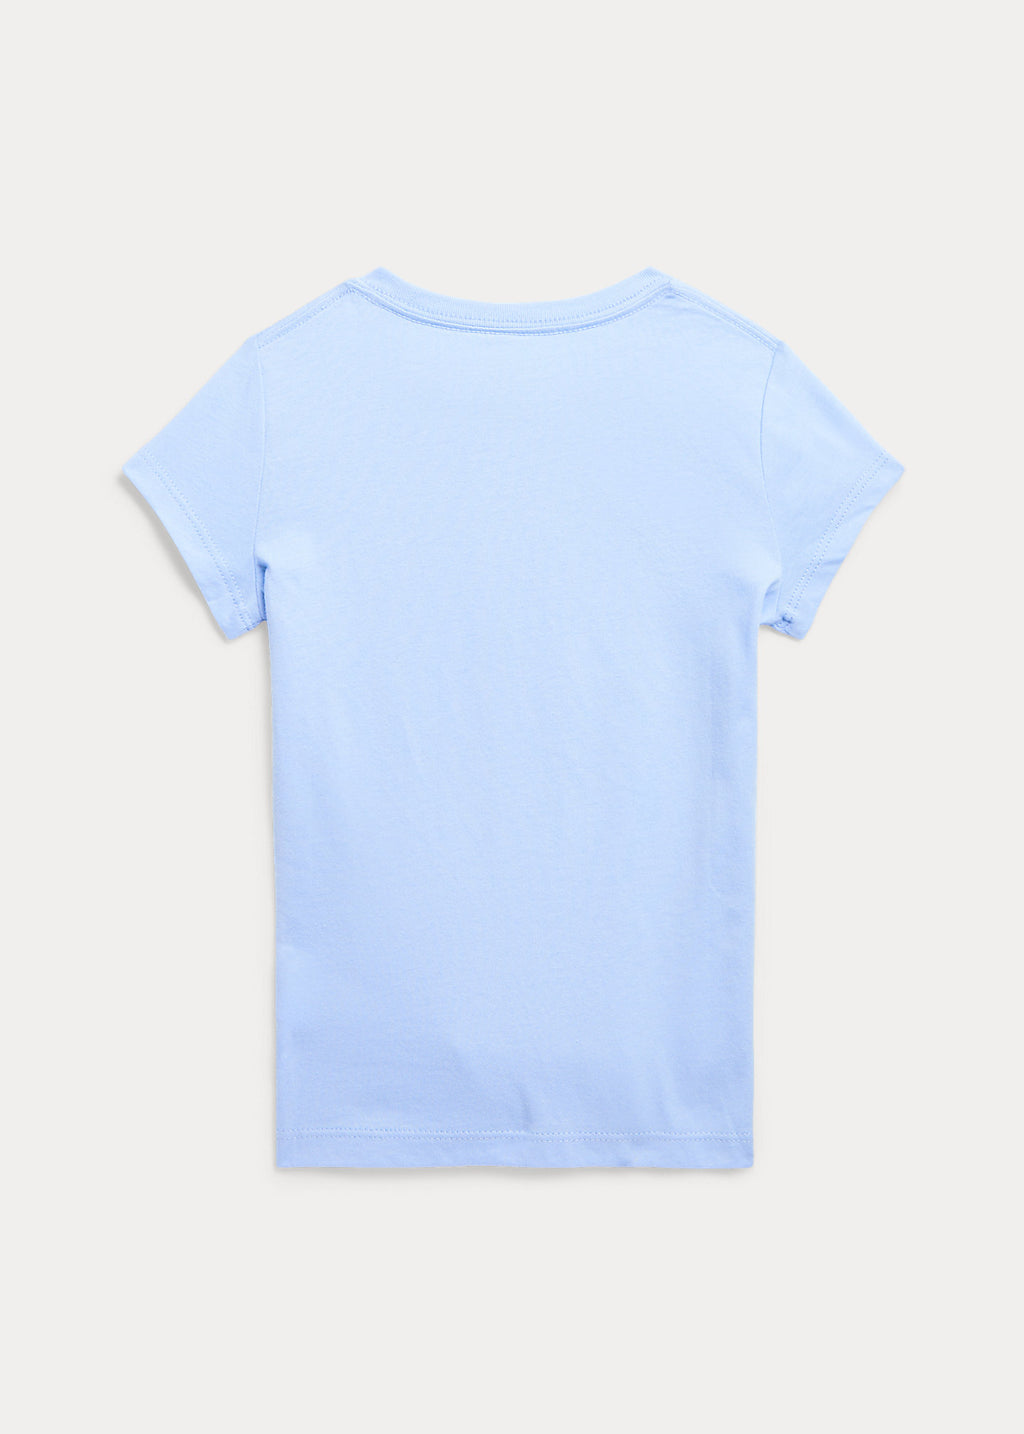 Ralph Lauren Big Pony Logo Cotton Jersey T-Shirt Baby Blue